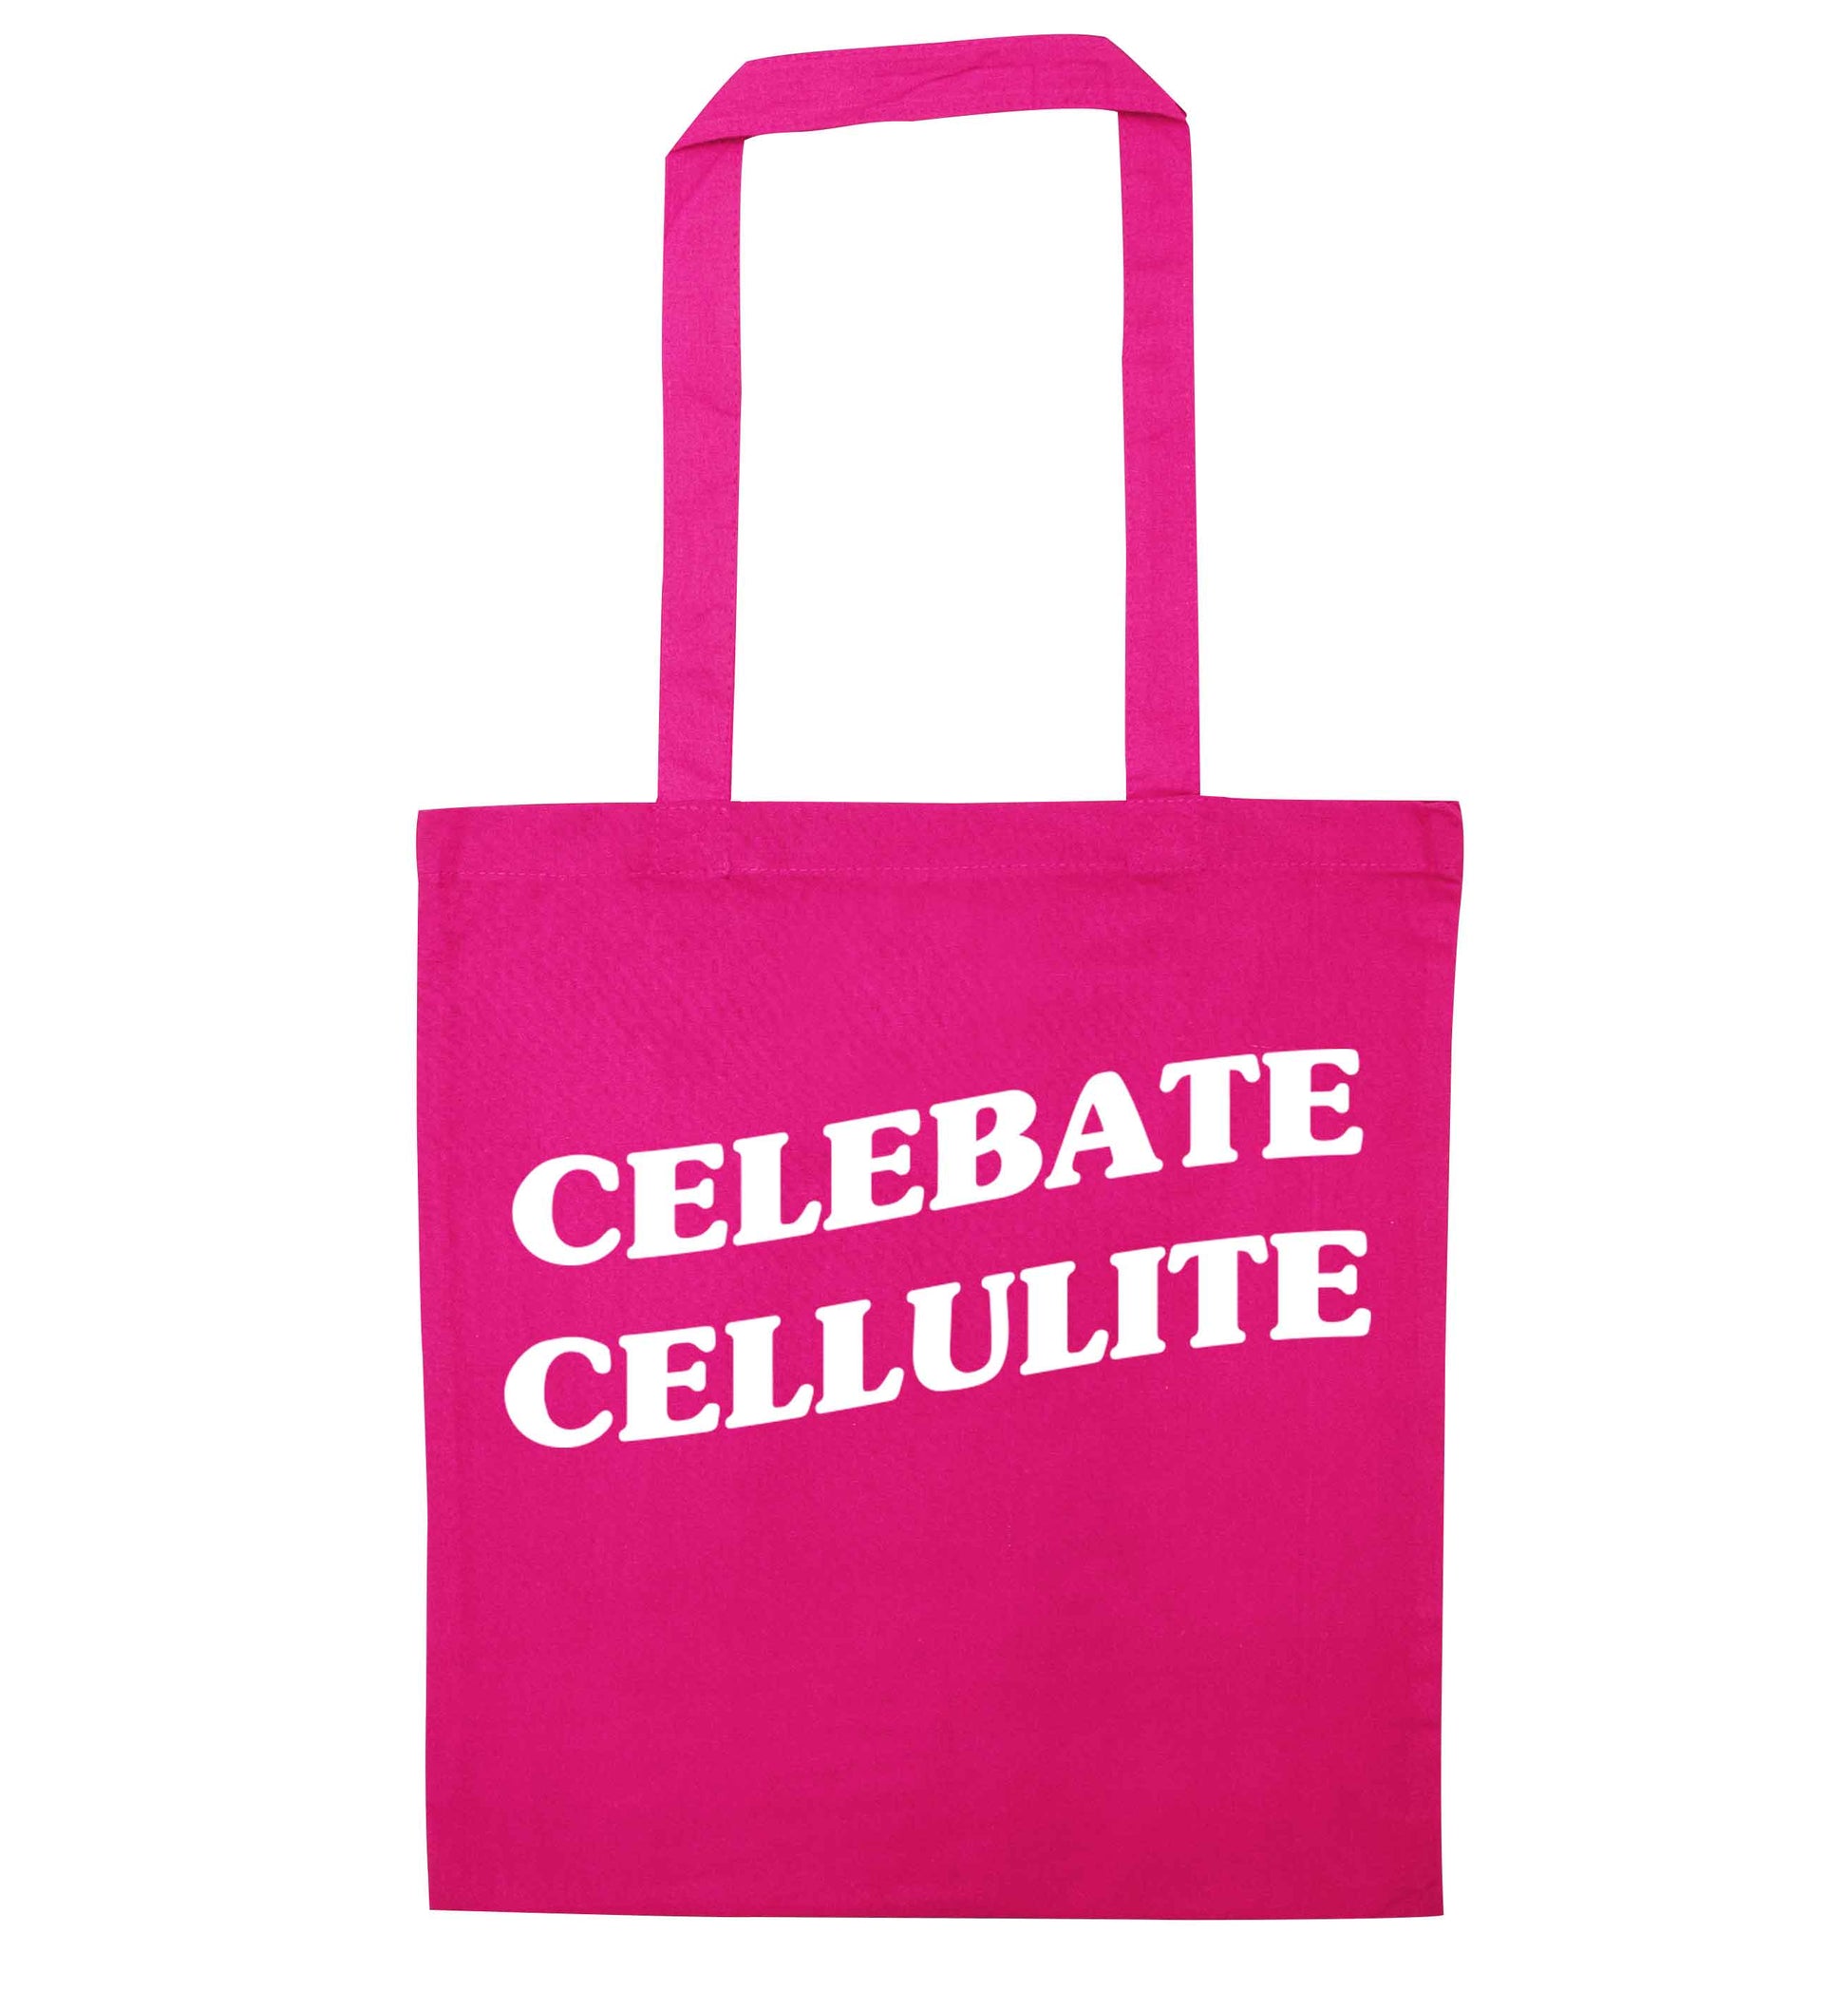 Celebrate cellulite pink tote bag